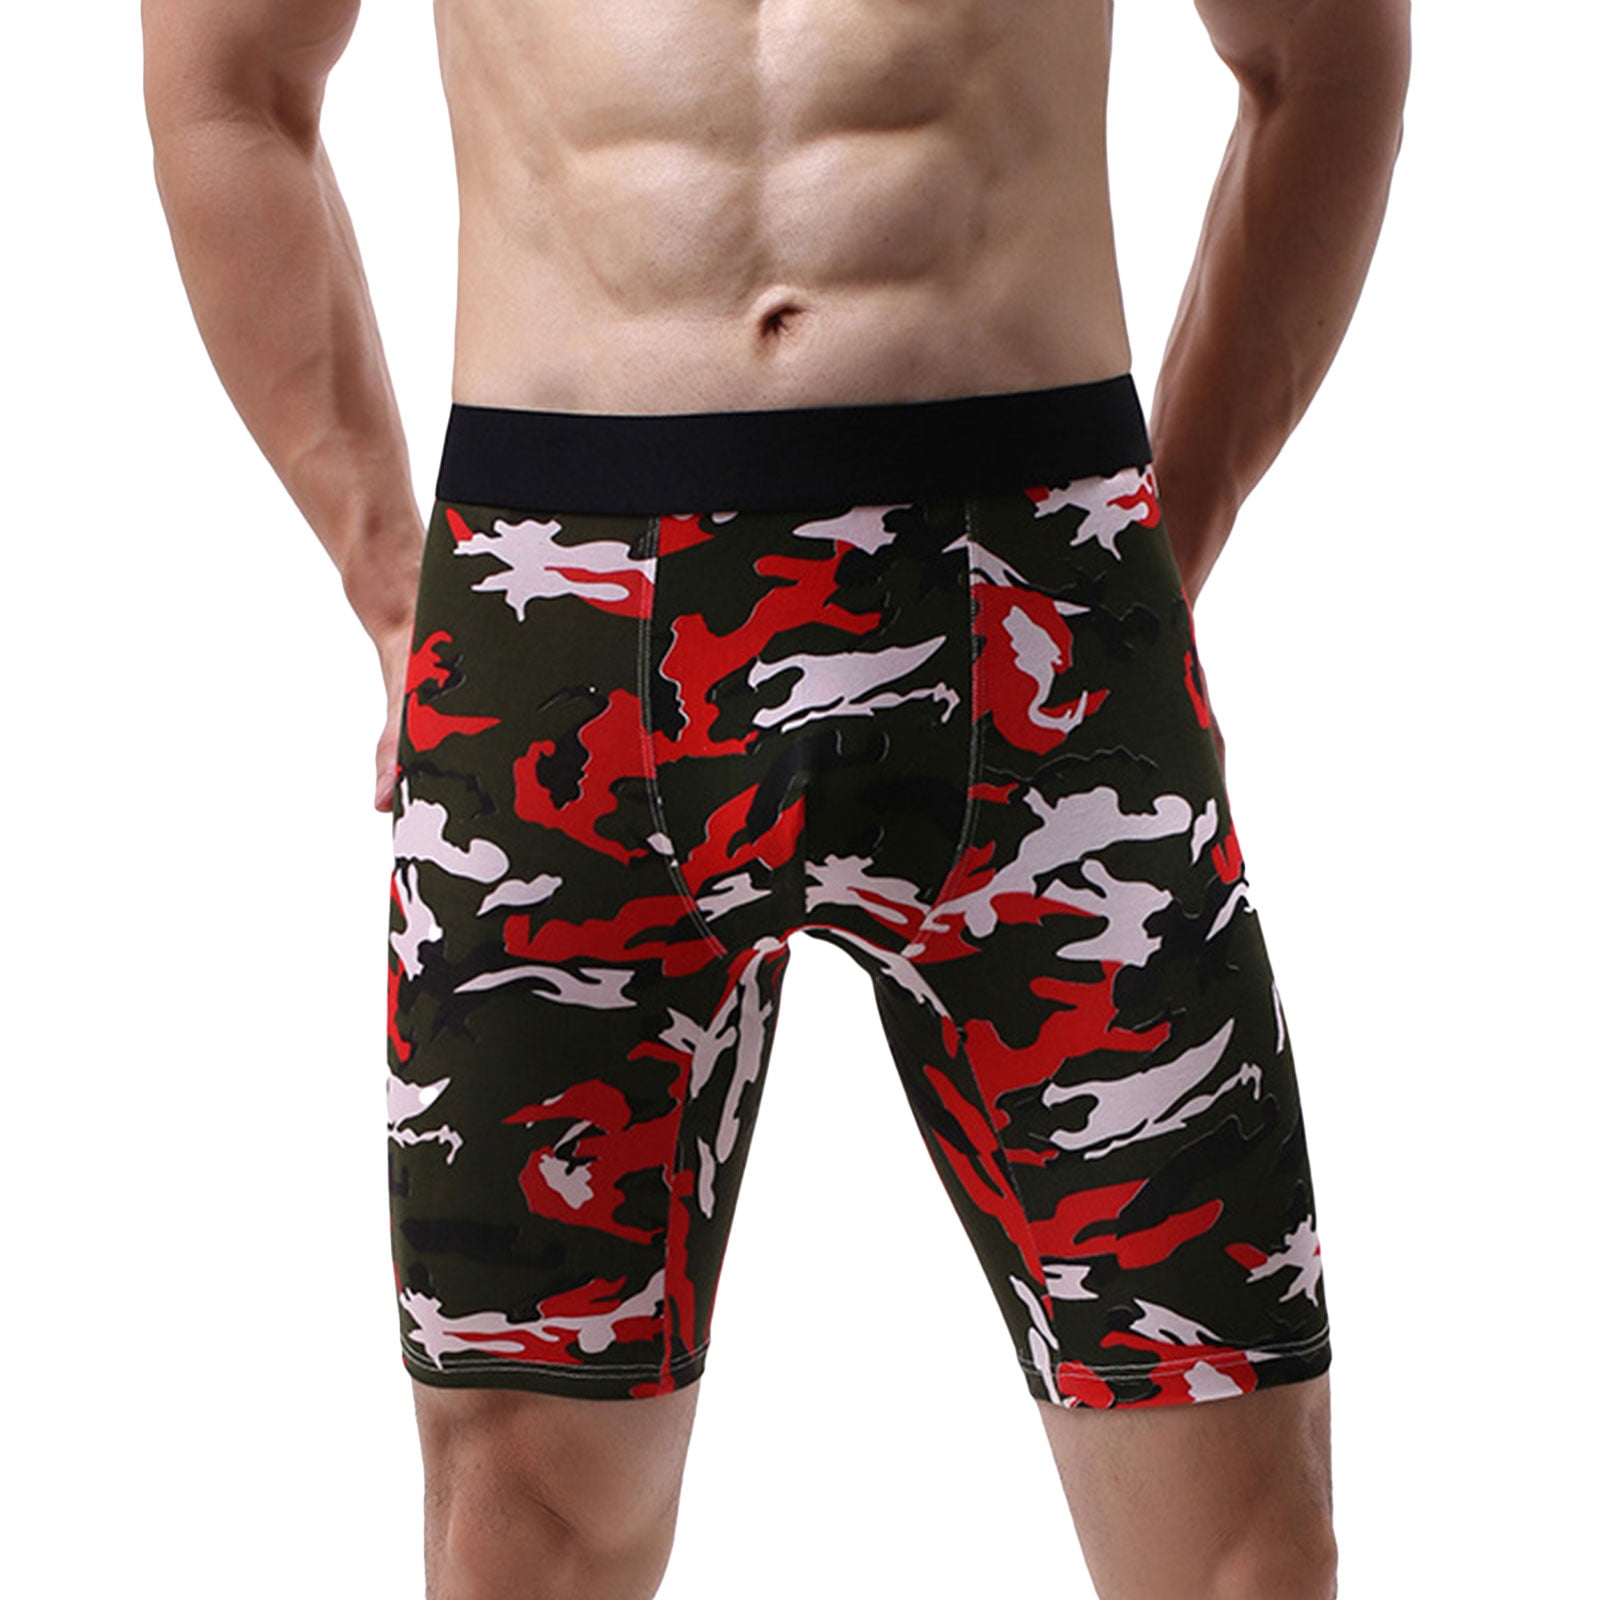 MOFEIYUE Mens Boxer Briefs Military Camo Camouflage Soft Short Underpants Underwear for Men Boys